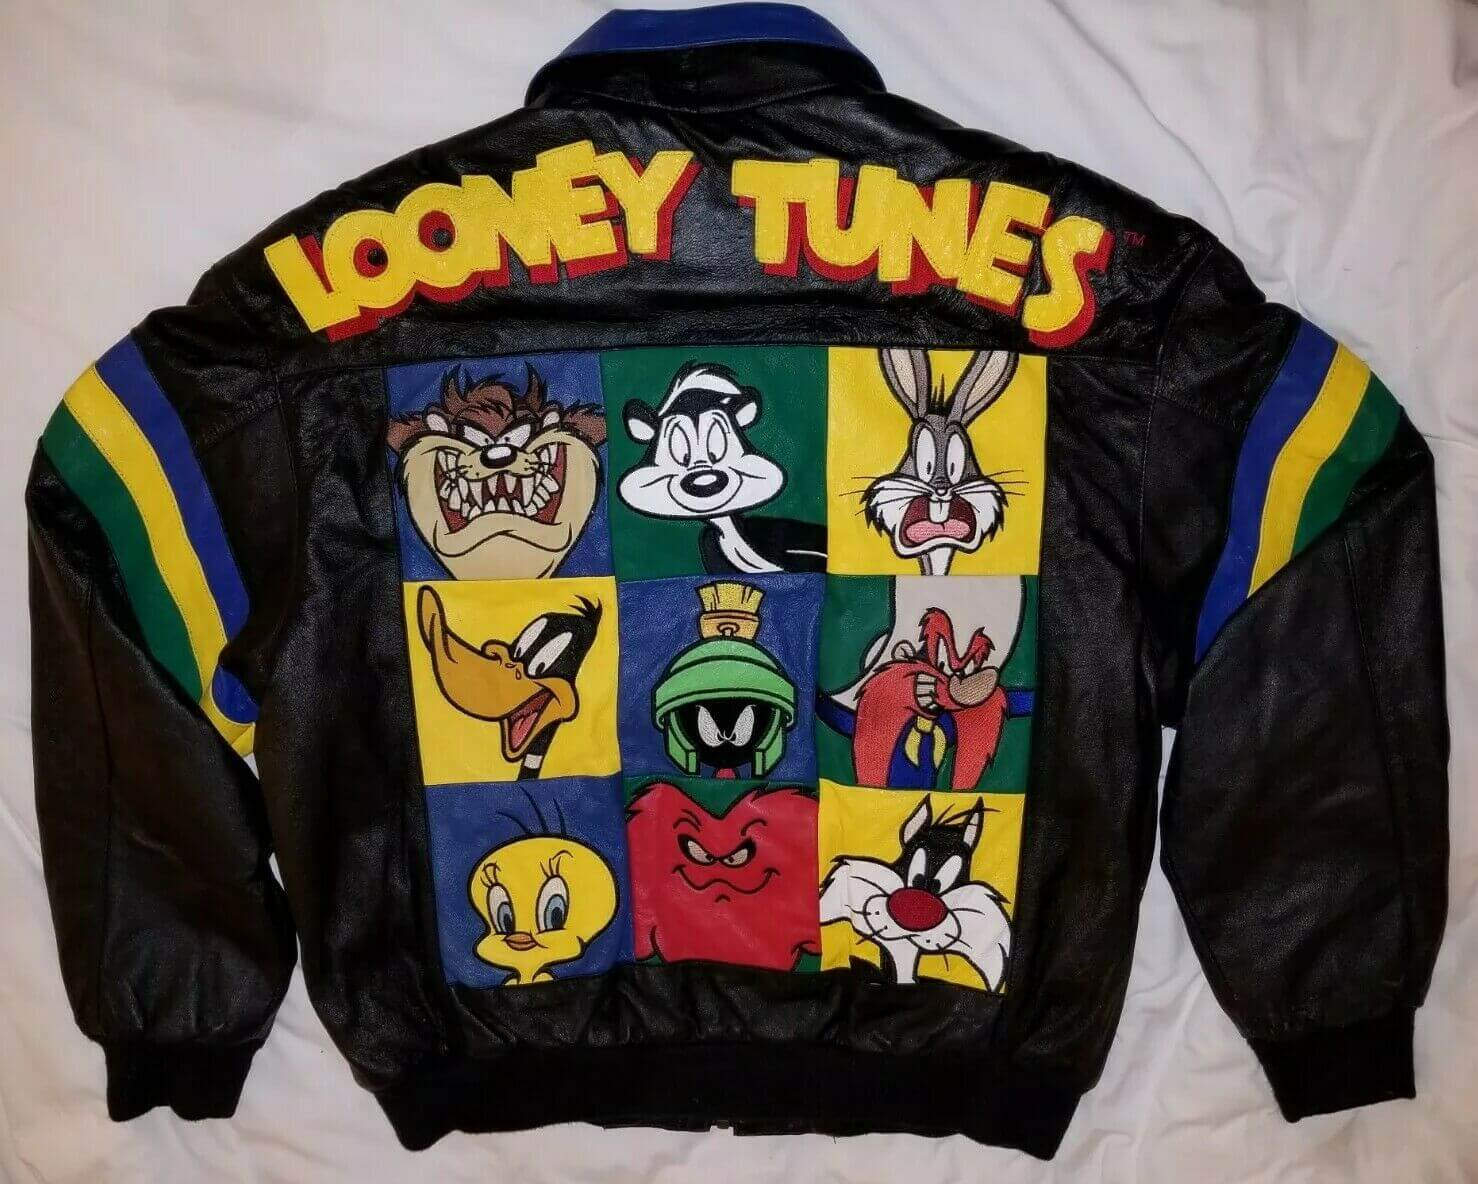 Vintage 90s Looney Tunes Leather Bomber Jacket